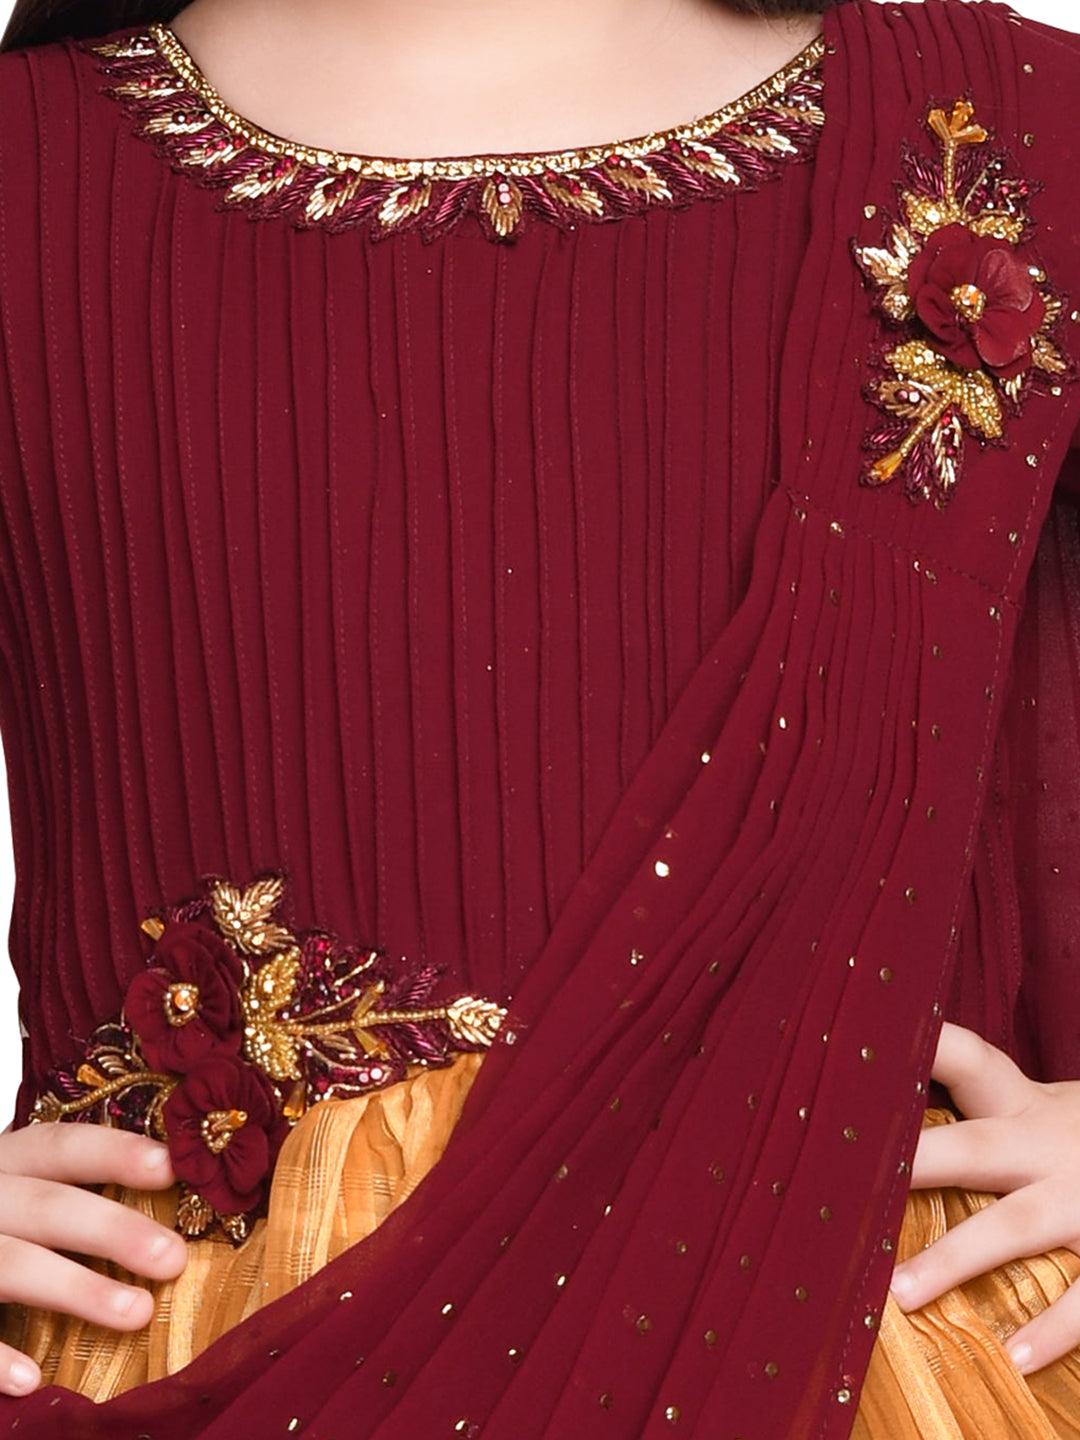 Kiara Advani dazzles in elegant sarees, redefining grace and glamour​ |  TOIPhotogallery